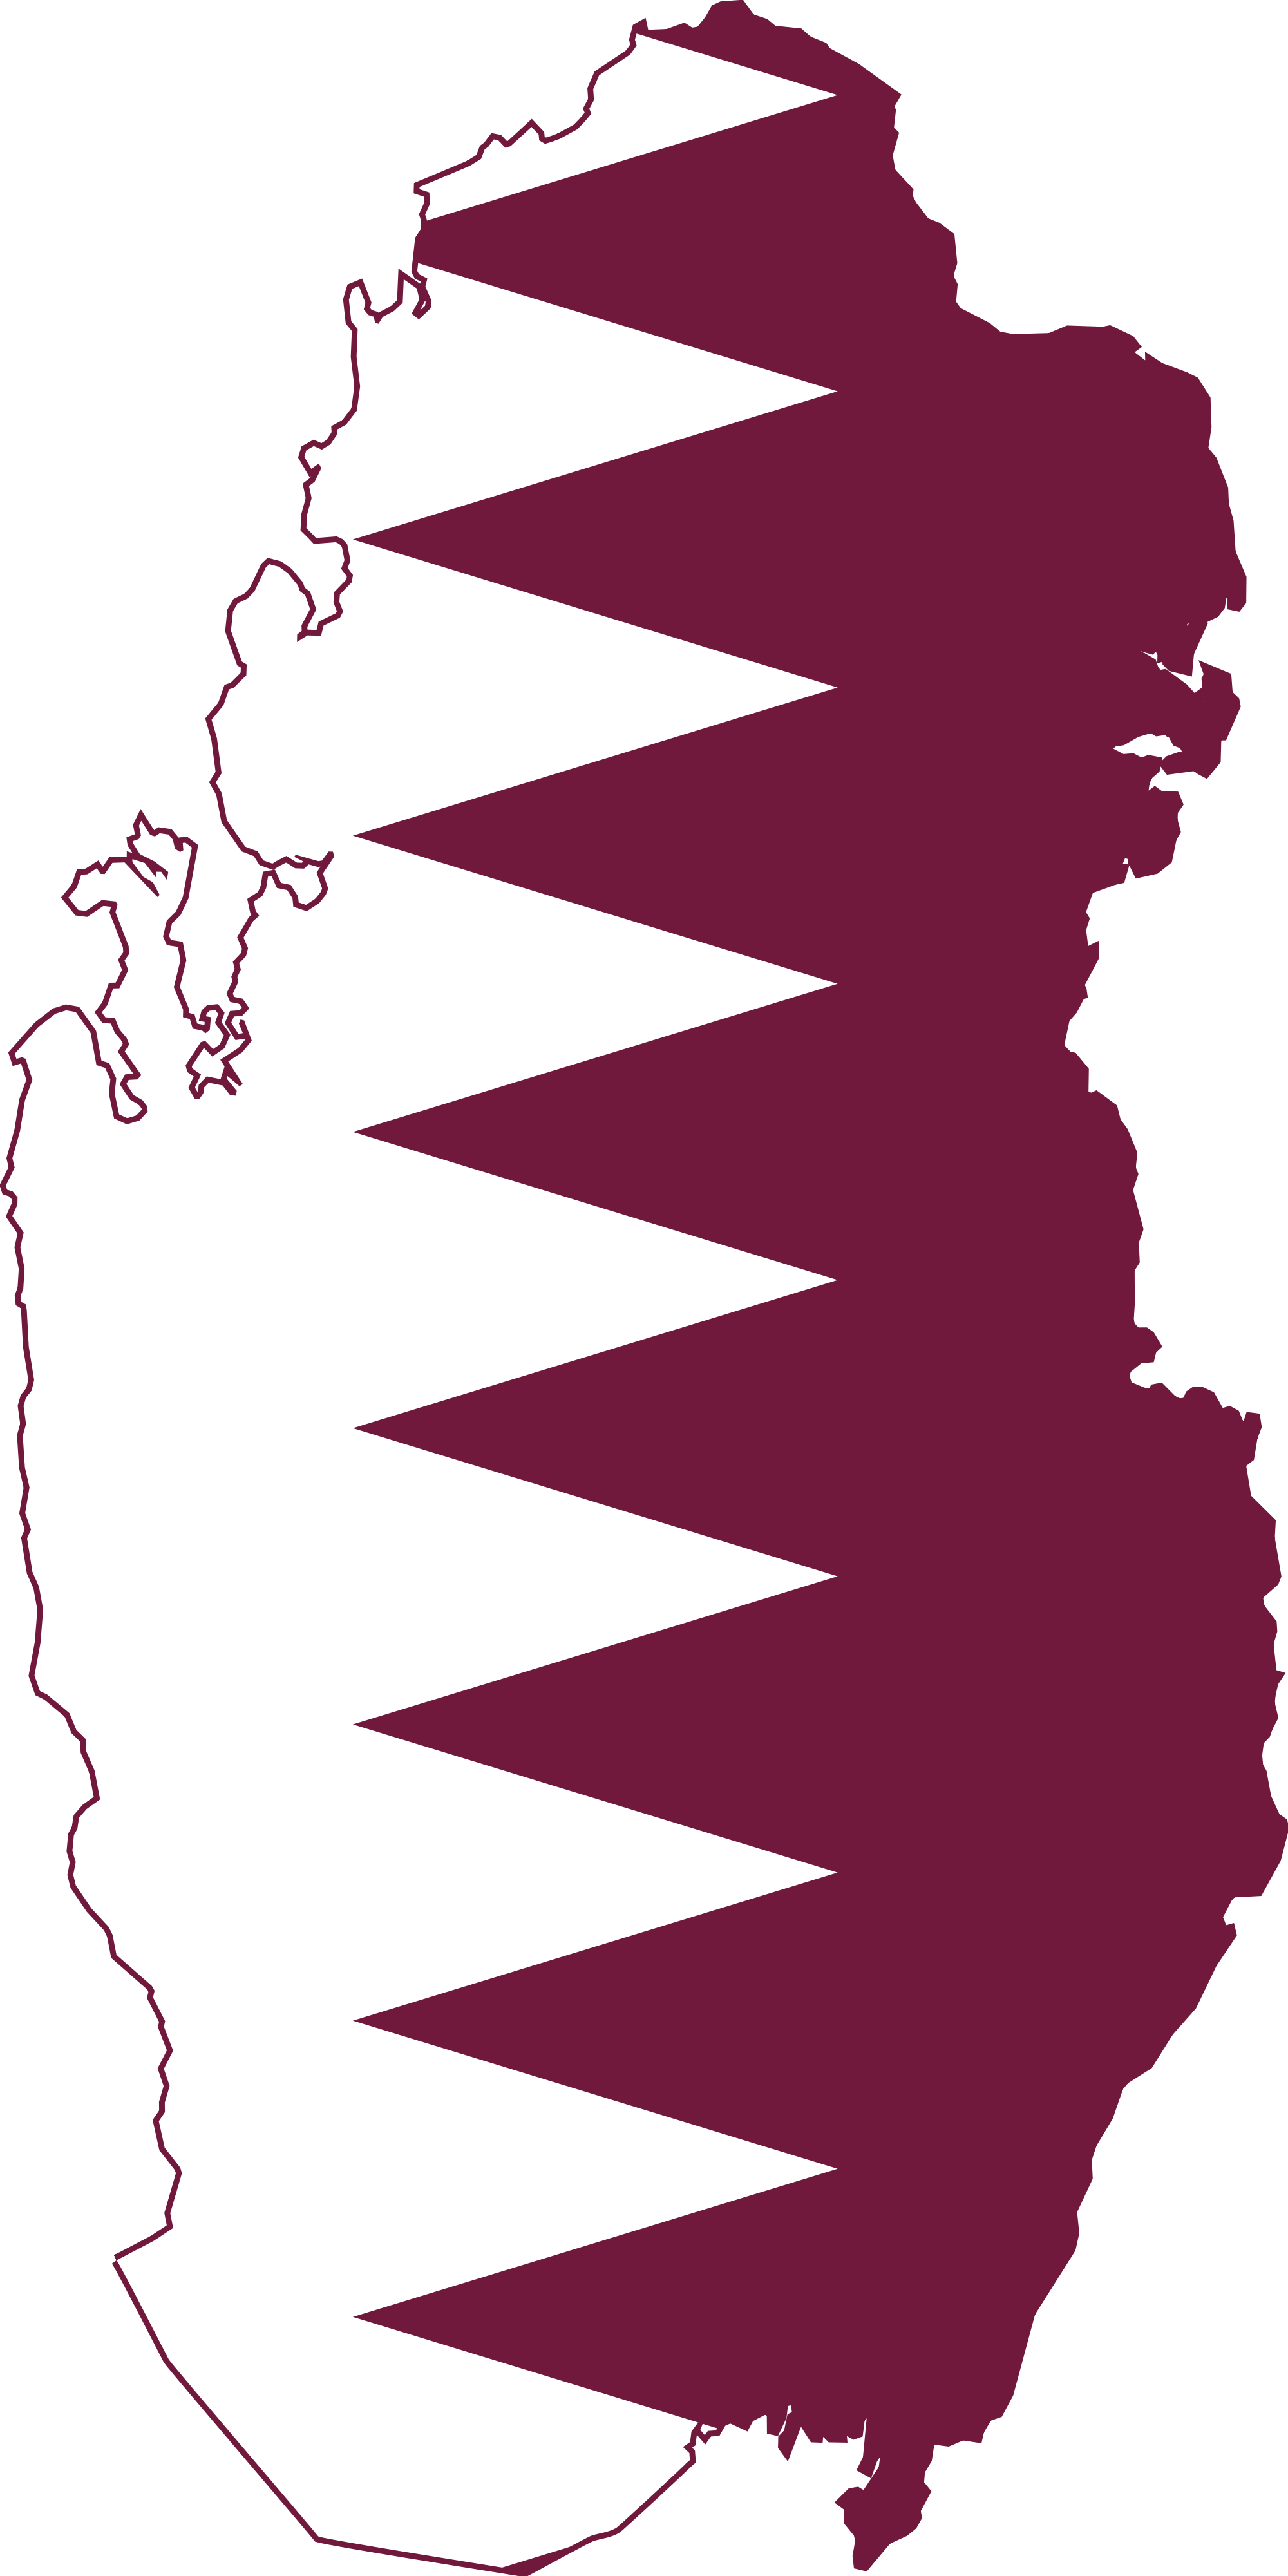 Qatar drapeau PNG image image